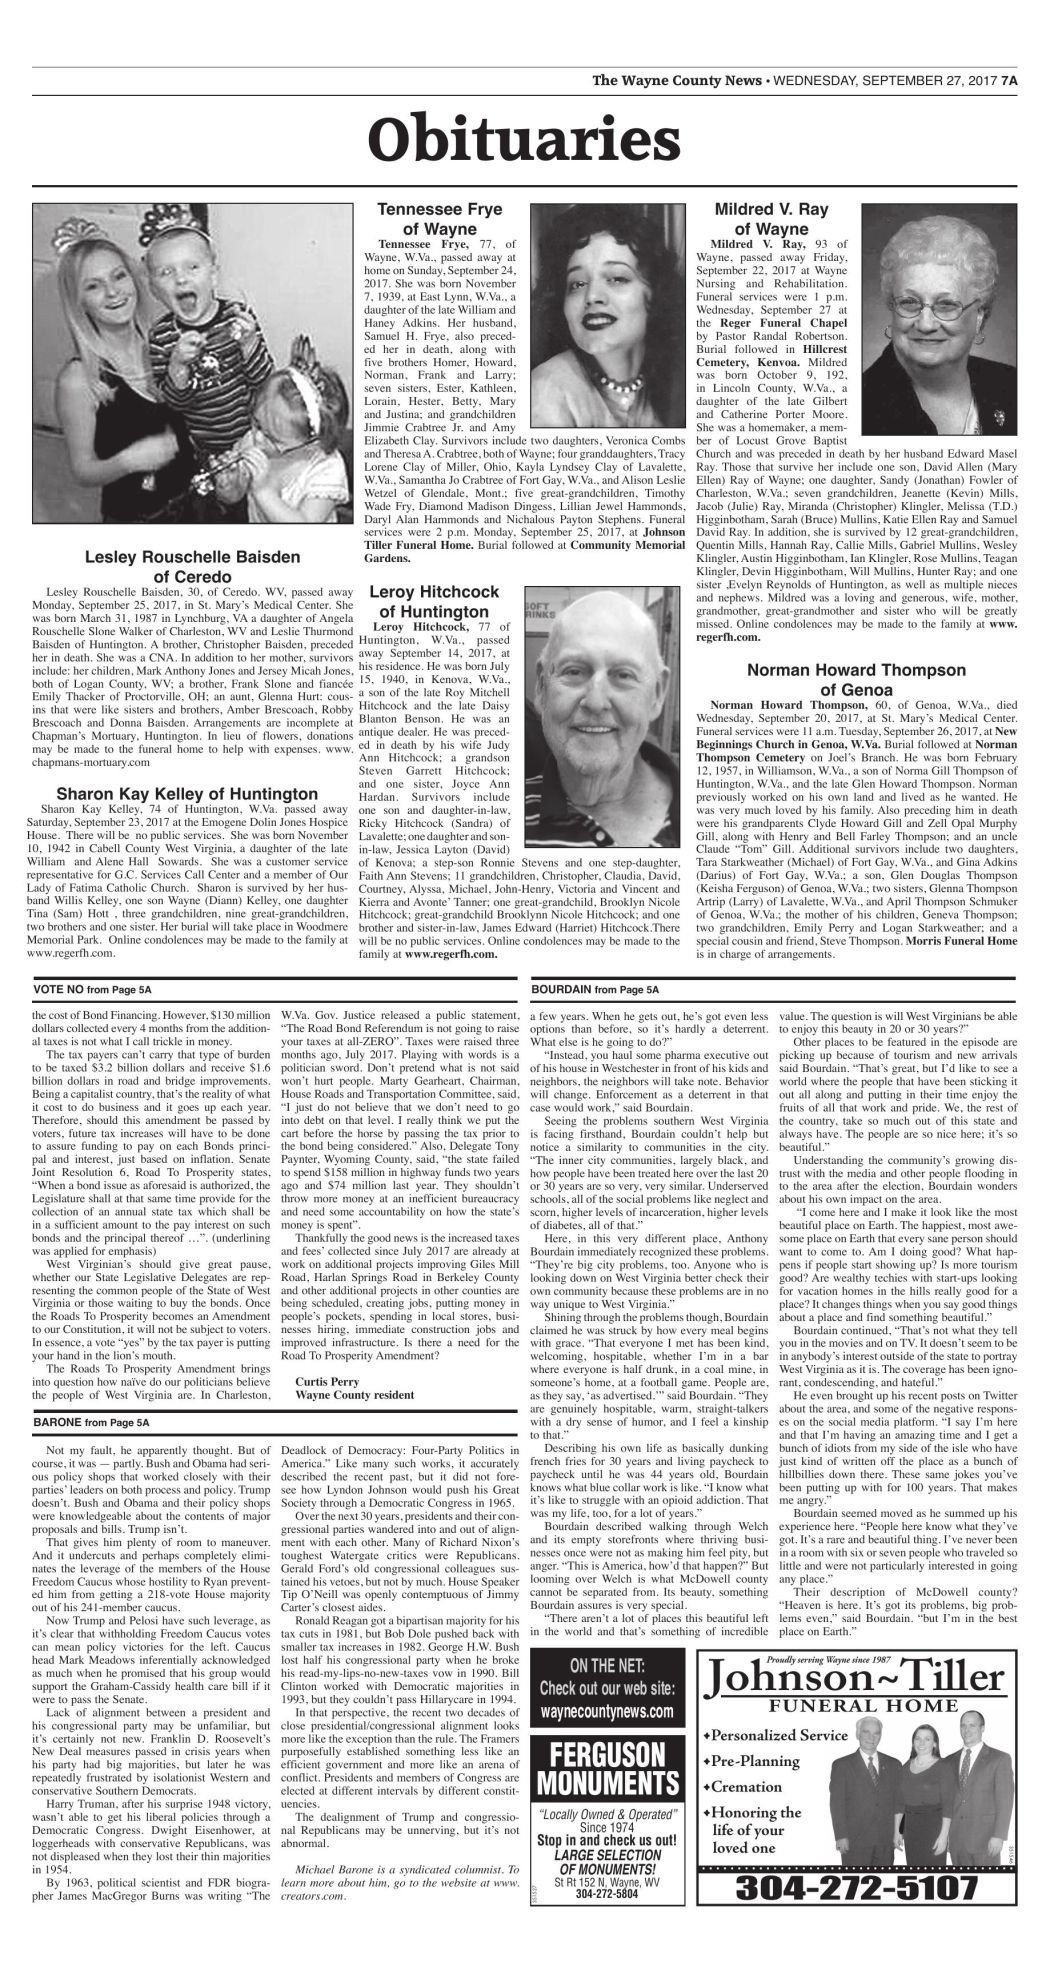 tribune review obituaries valley news dispatch